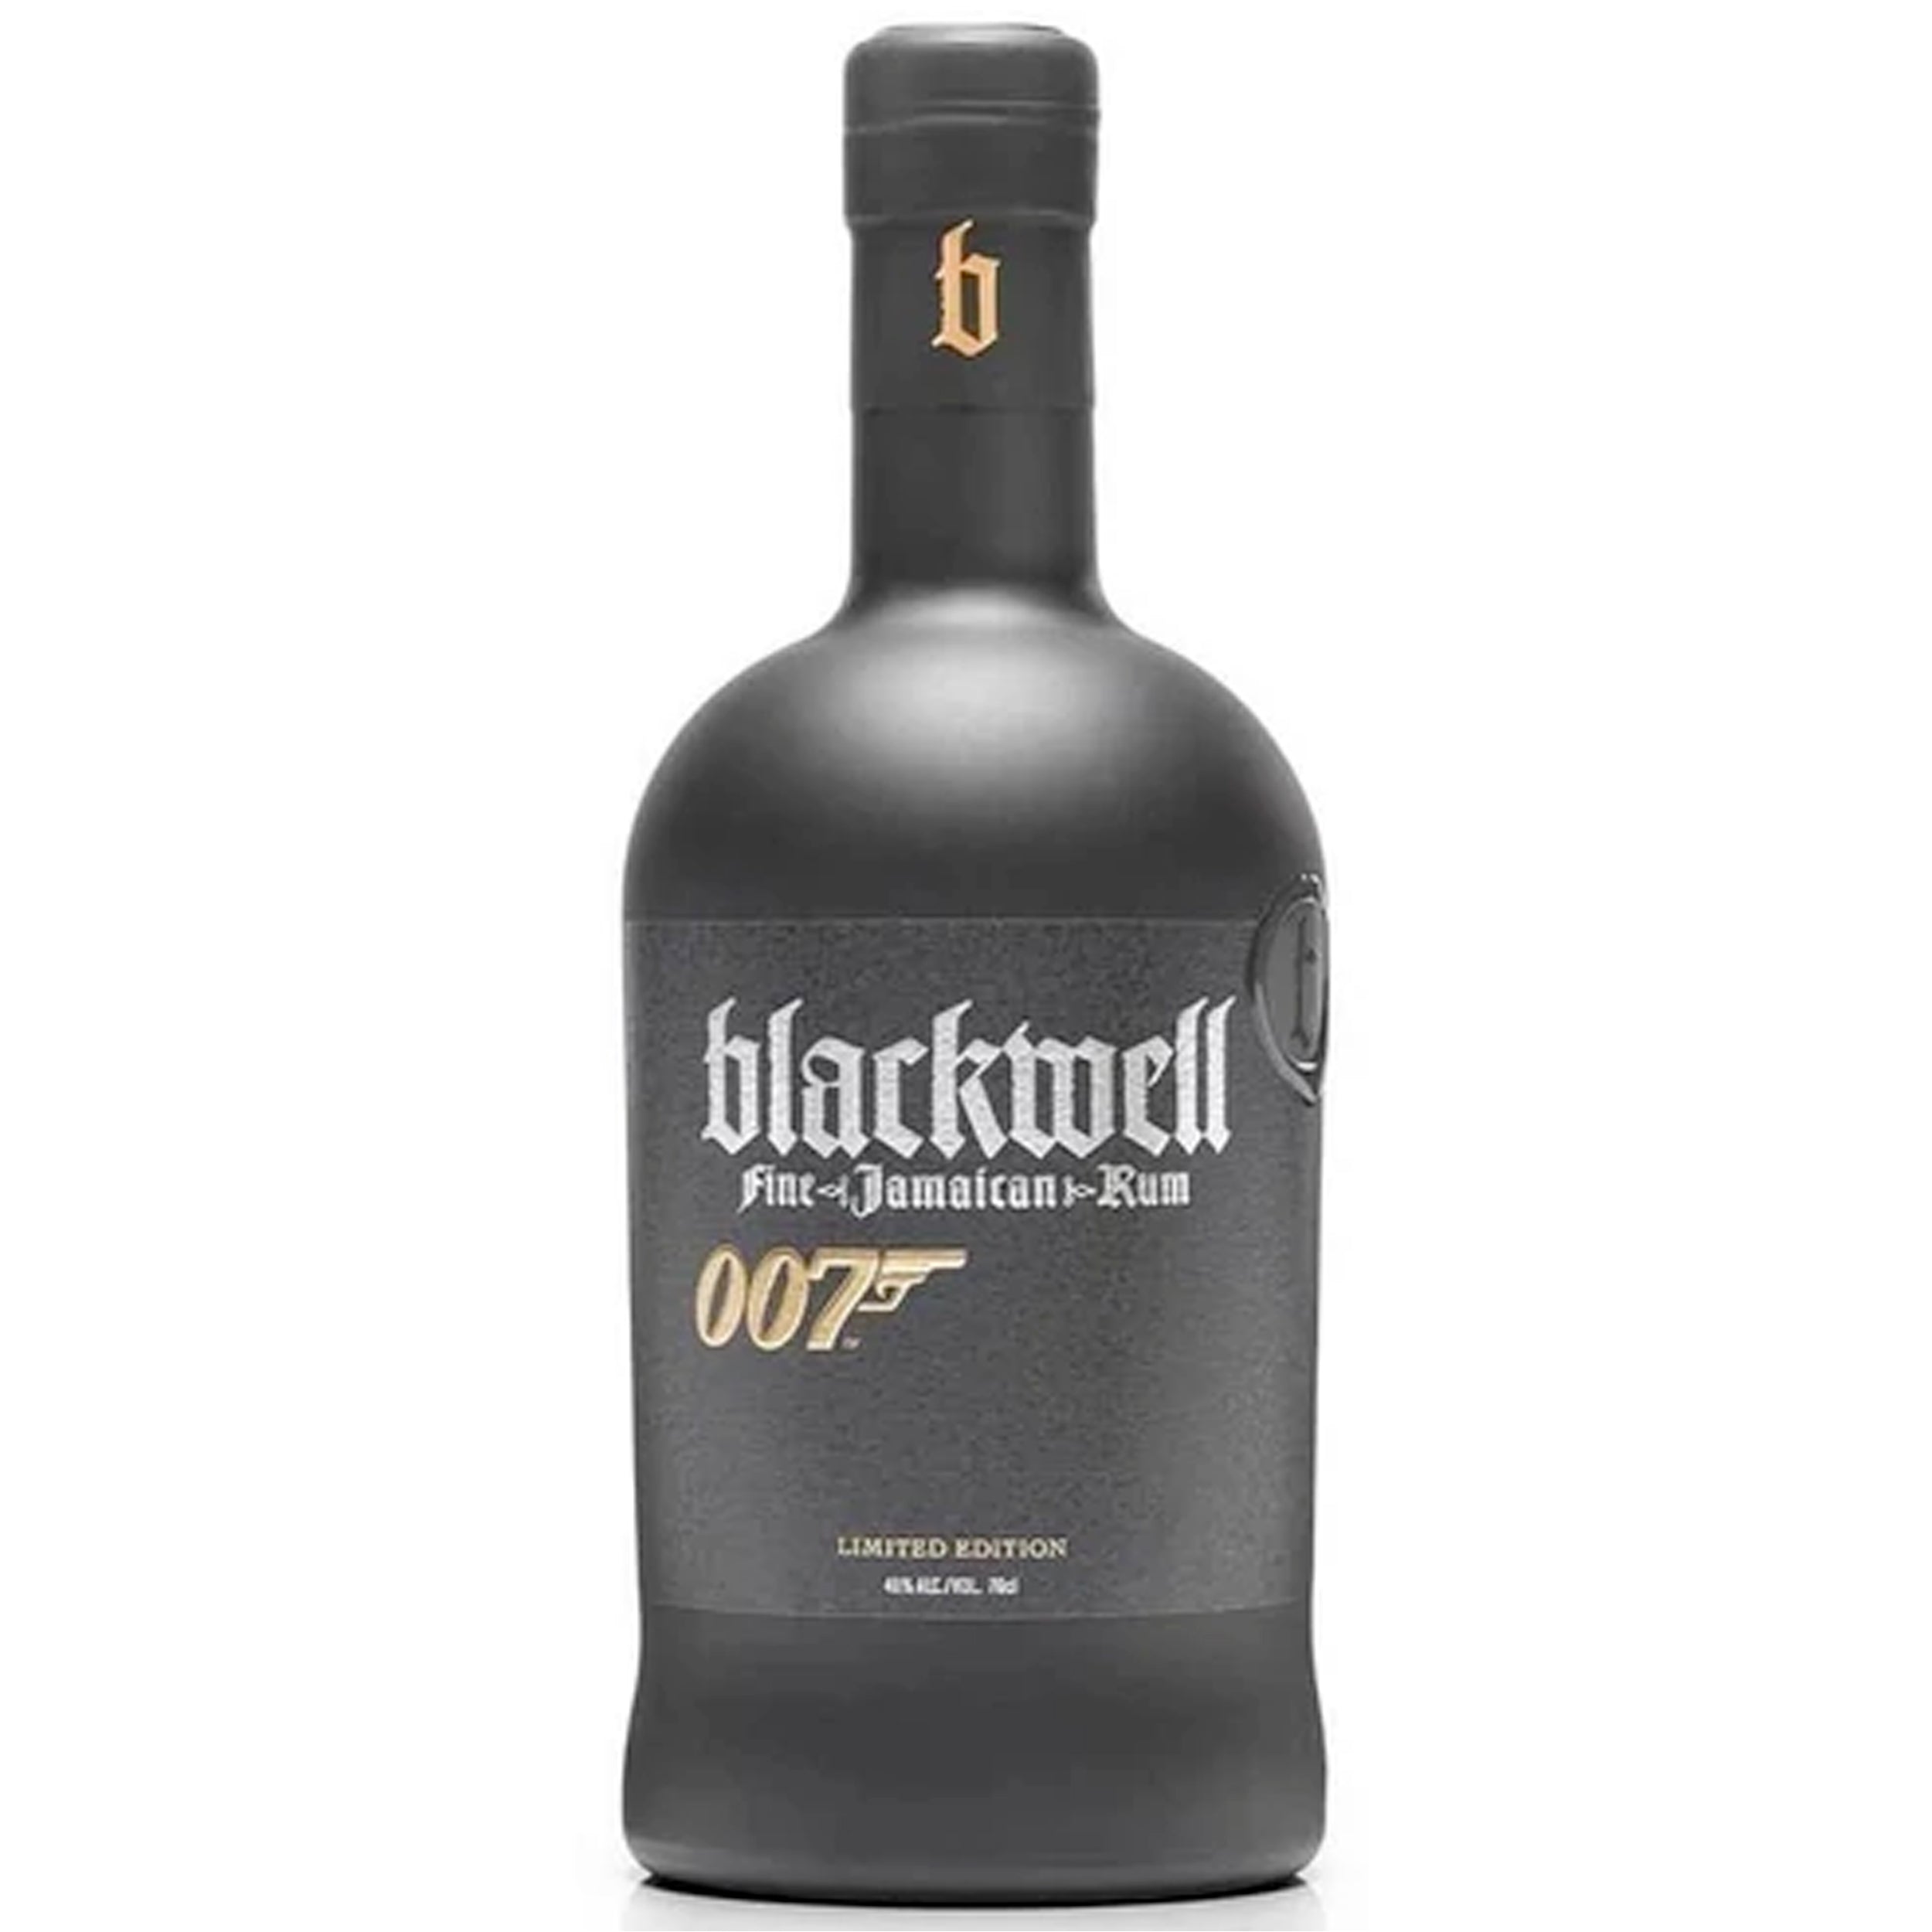 Blackwell Jamaican Rum 007 Edition